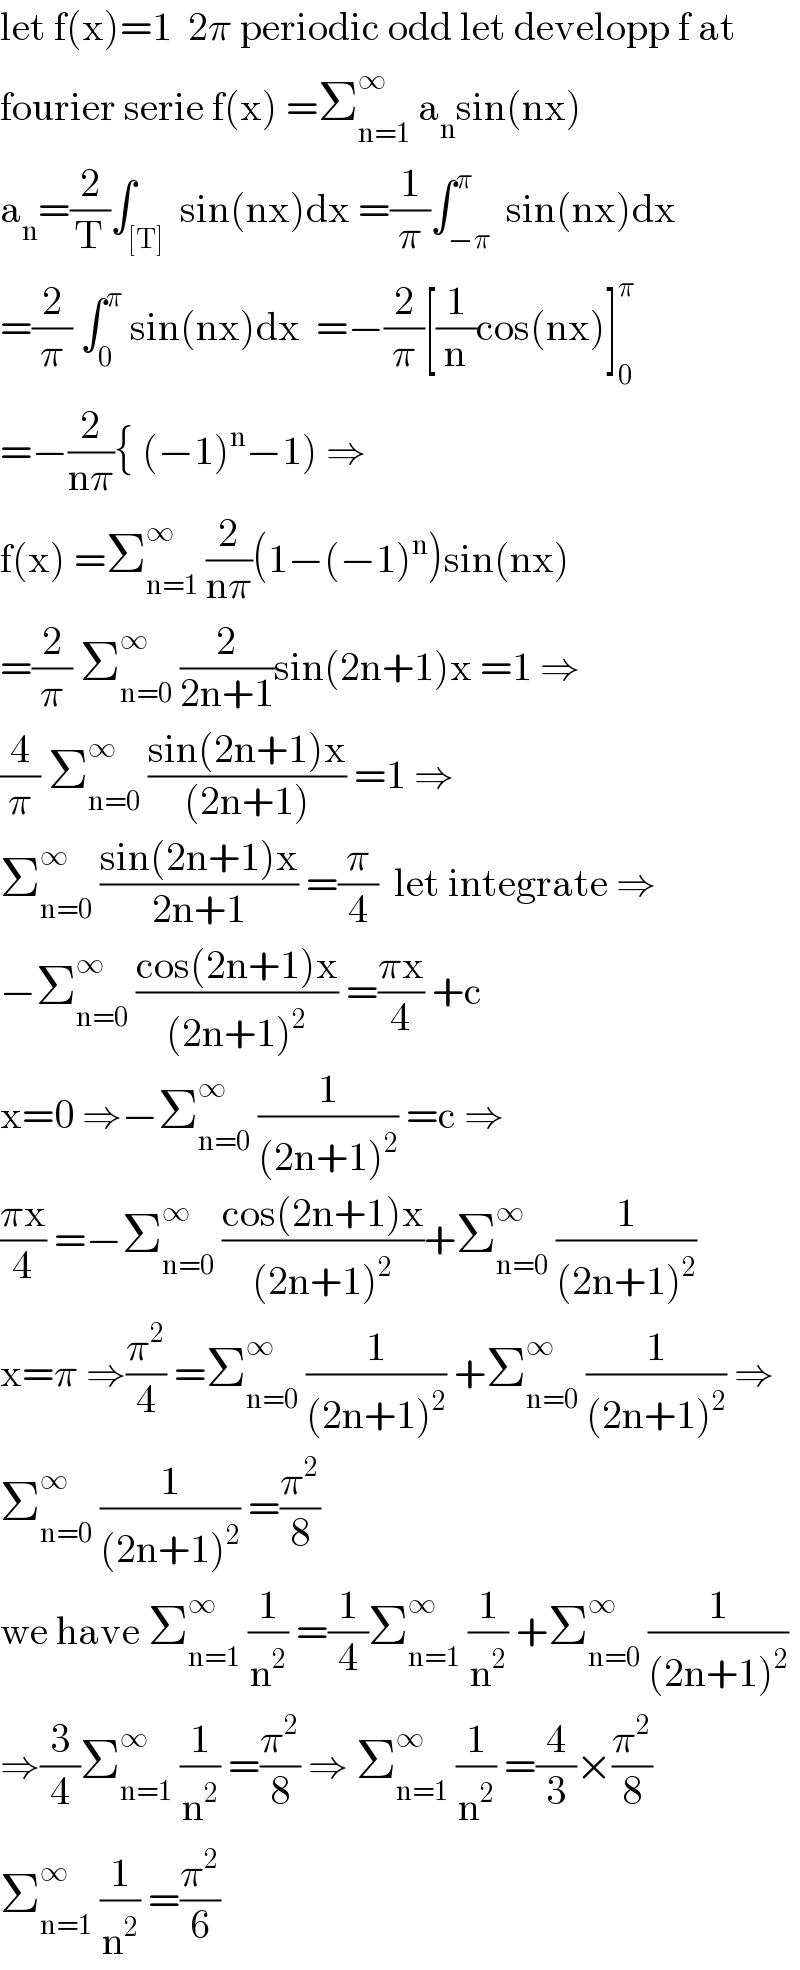 let f(x)=1  2π periodic odd let developp f at   fourier serie f(x) =Σ_(n=1) ^∞  a_n sin(nx)  a_n =(2/T)∫_([T])  sin(nx)dx =(1/π)∫_(−π) ^π  sin(nx)dx  =(2/π) ∫_0 ^π  sin(nx)dx  =−(2/π)[(1/n)cos(nx)]_0 ^π   =−(2/(nπ)){ (−1)^n −1) ⇒  f(x) =Σ_(n=1) ^(∞ )  (2/(nπ))(1−(−1)^n )sin(nx)  =(2/π) Σ_(n=0) ^∞  (2/(2n+1))sin(2n+1)x =1 ⇒  (4/π) Σ_(n=0) ^∞  ((sin(2n+1)x)/((2n+1))) =1 ⇒  Σ_(n=0) ^∞  ((sin(2n+1)x)/(2n+1)) =(π/4)  let integrate ⇒  −Σ_(n=0) ^∞  ((cos(2n+1)x)/((2n+1)^2 )) =((πx)/4) +c  x=0 ⇒−Σ_(n=0) ^∞  (1/((2n+1)^2 )) =c ⇒  ((πx)/4) =−Σ_(n=0) ^∞  ((cos(2n+1)x)/((2n+1)^2 ))+Σ_(n=0) ^∞  (1/((2n+1)^2 ))  x=π ⇒(π^2 /4) =Σ_(n=0) ^∞  (1/((2n+1)^2 )) +Σ_(n=0) ^∞  (1/((2n+1)^2 )) ⇒  Σ_(n=0) ^∞  (1/((2n+1)^2 )) =(π^2 /8)  we have Σ_(n=1) ^∞  (1/n^2 ) =(1/4)Σ_(n=1) ^∞  (1/n^2 ) +Σ_(n=0) ^∞  (1/((2n+1)^2 ))  ⇒(3/4)Σ_(n=1) ^∞  (1/n^2 ) =(π^2 /8) ⇒ Σ_(n=1) ^∞  (1/n^2 ) =(4/3)×(π^2 /8)  Σ_(n=1) ^∞  (1/n^2 ) =(π^2 /6)  